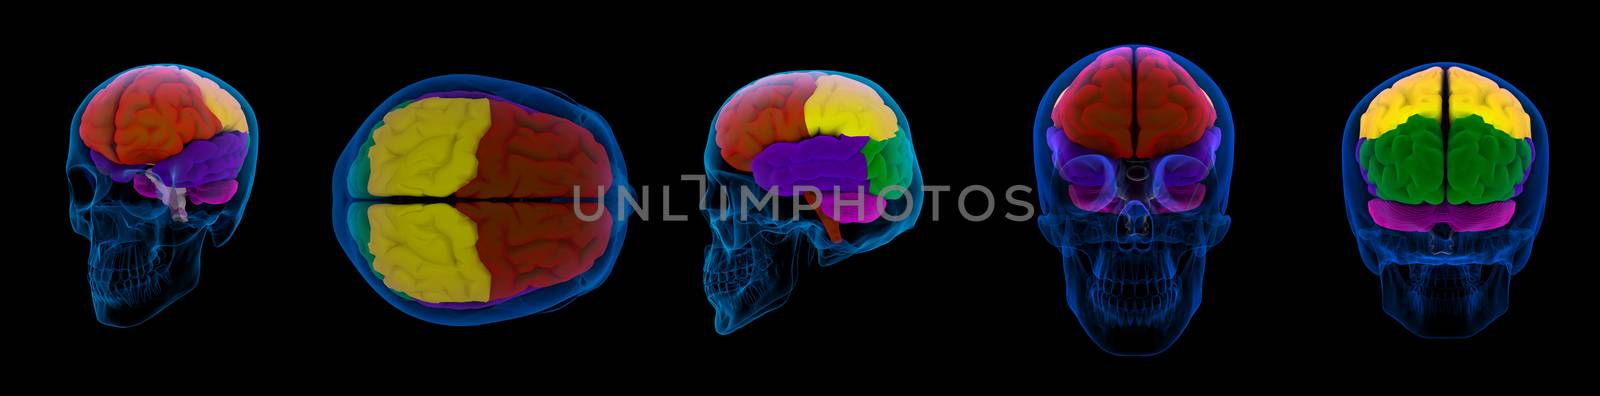 3d render illustration  of a  human brain by maya2008